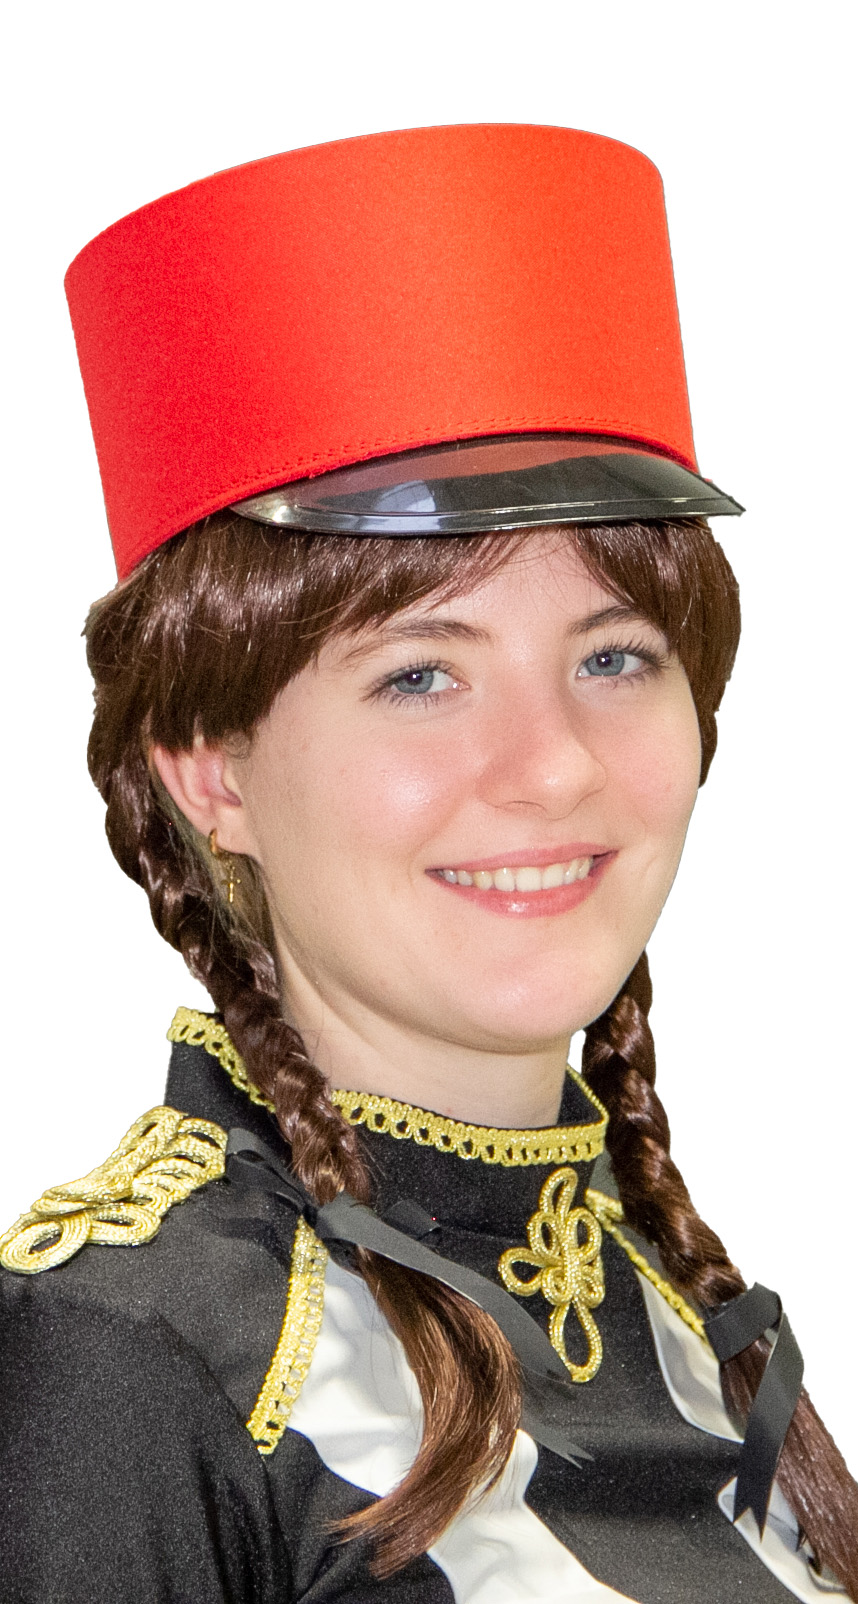 uniform hat with peak, red